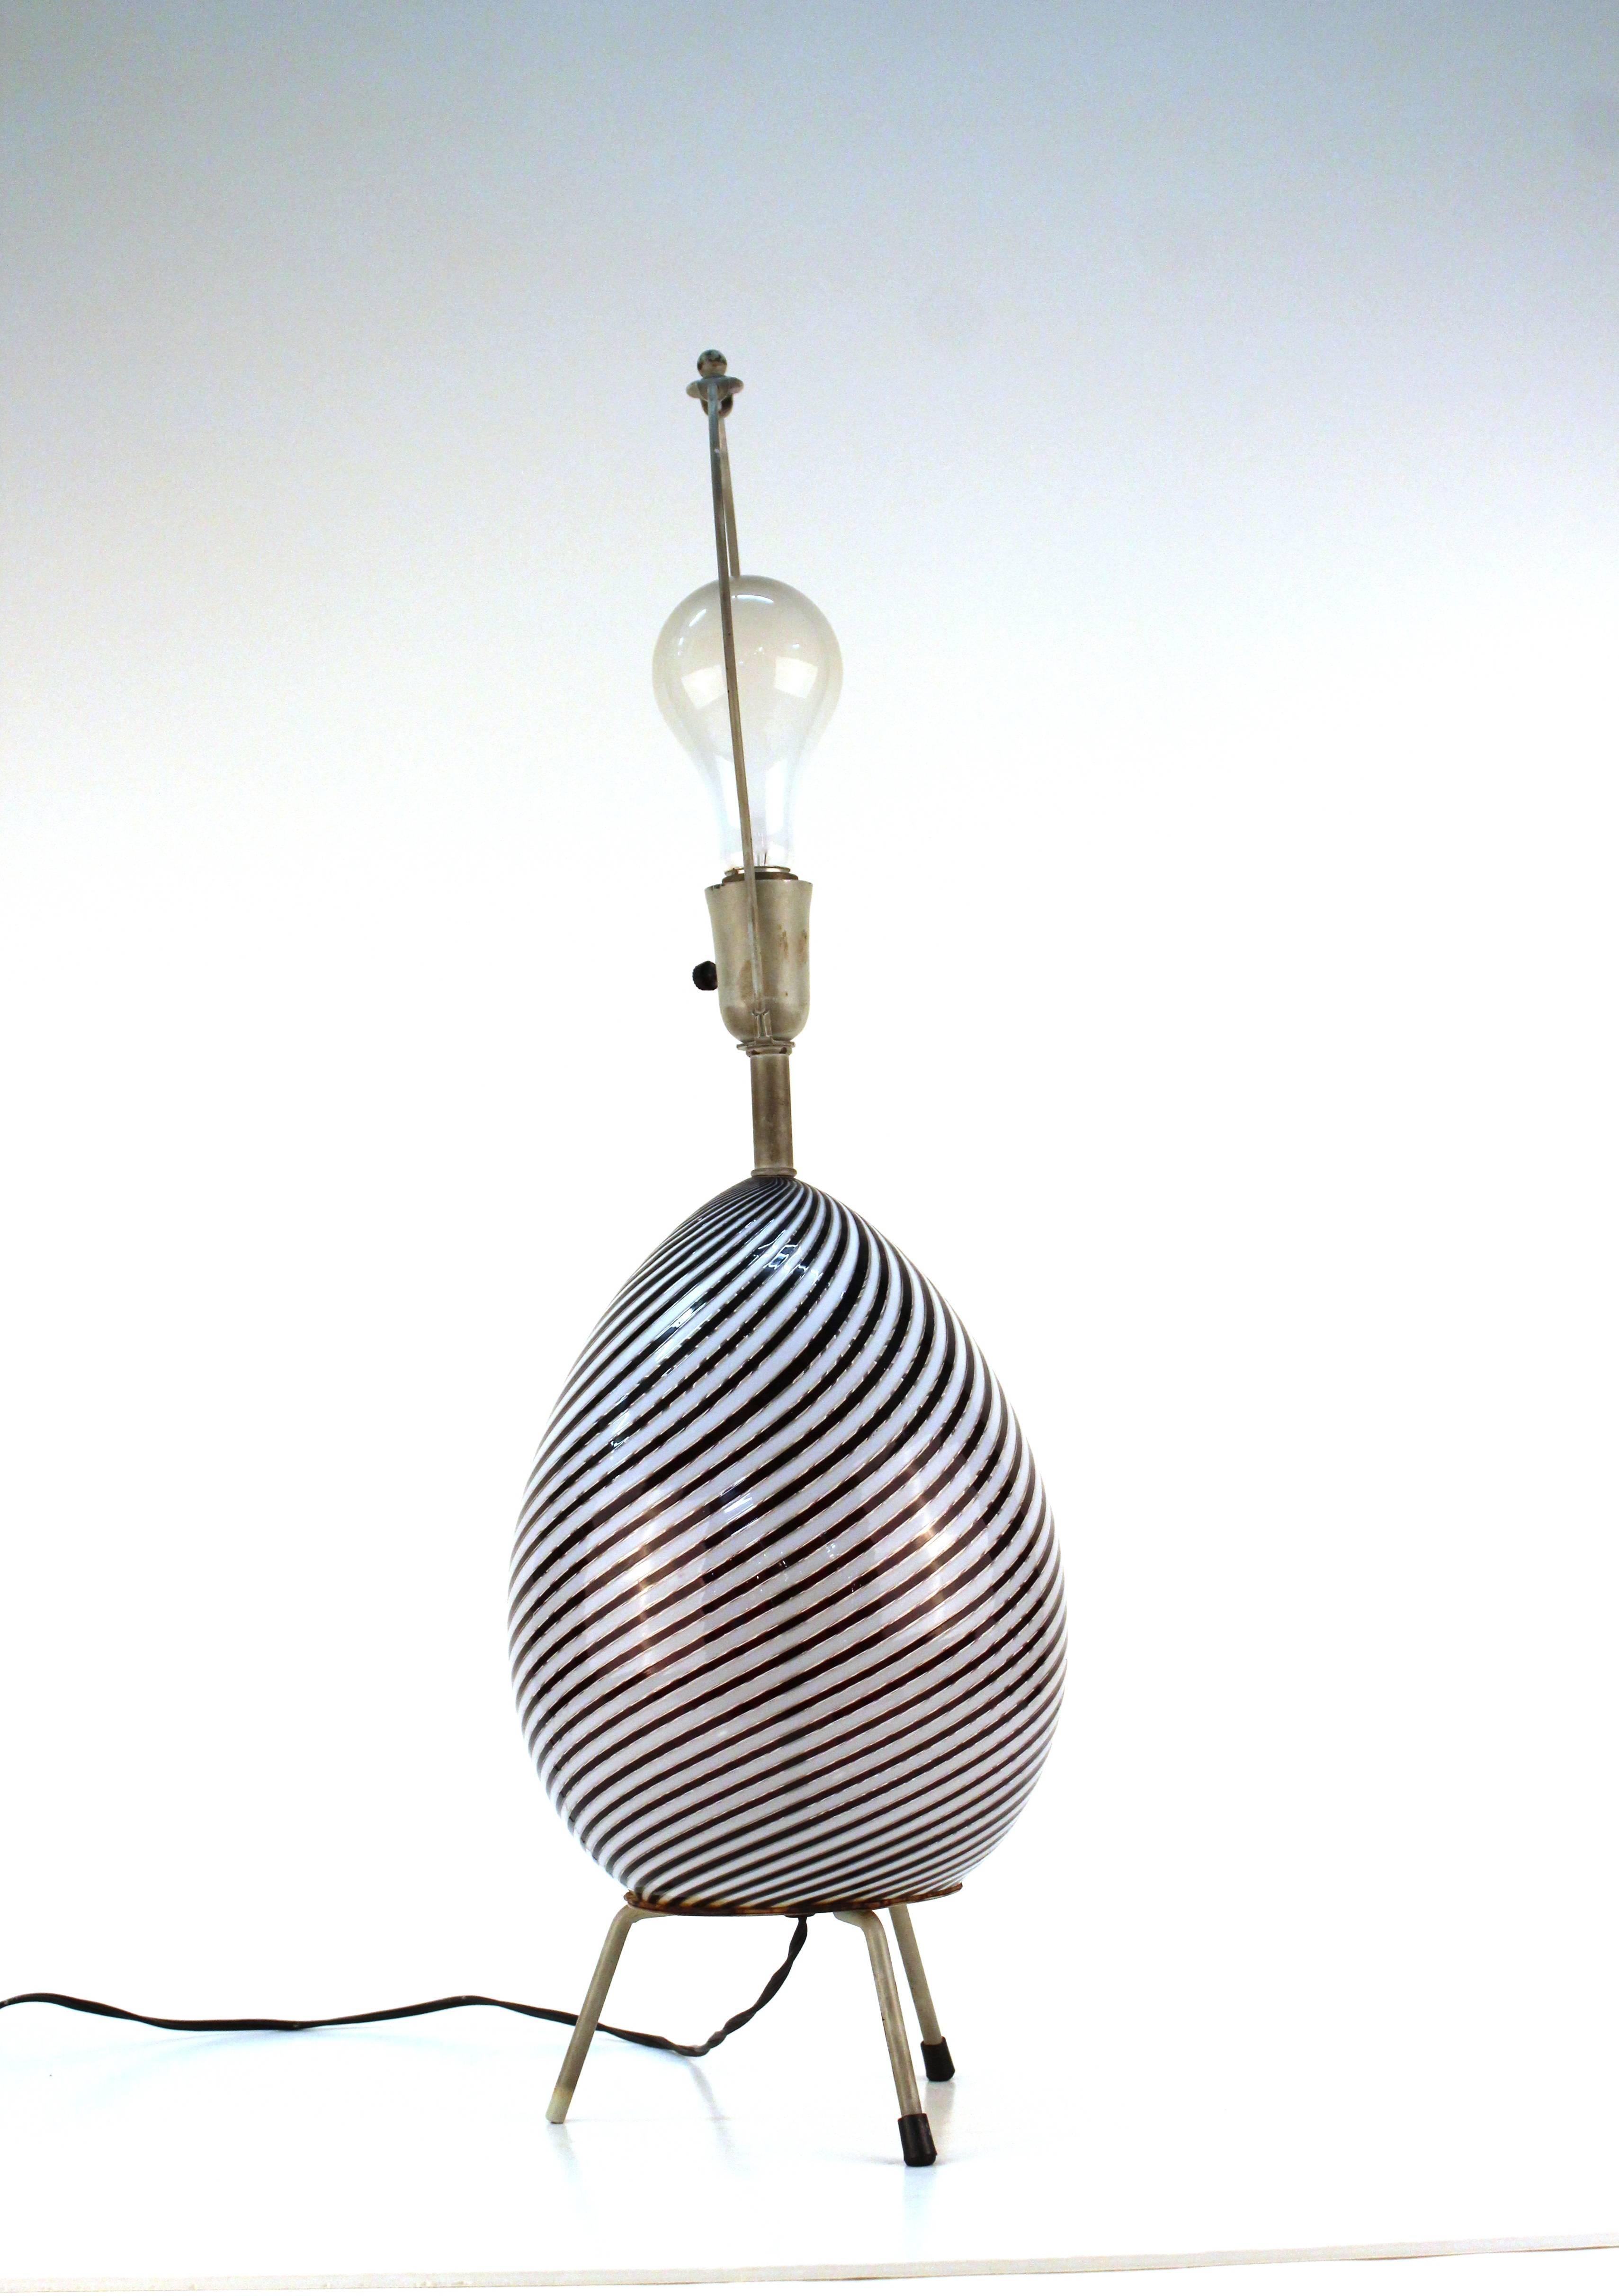 A Venini Murano Glass egg lamp with white and deep plum swirls, Mounted on tripod legs. 

110525.